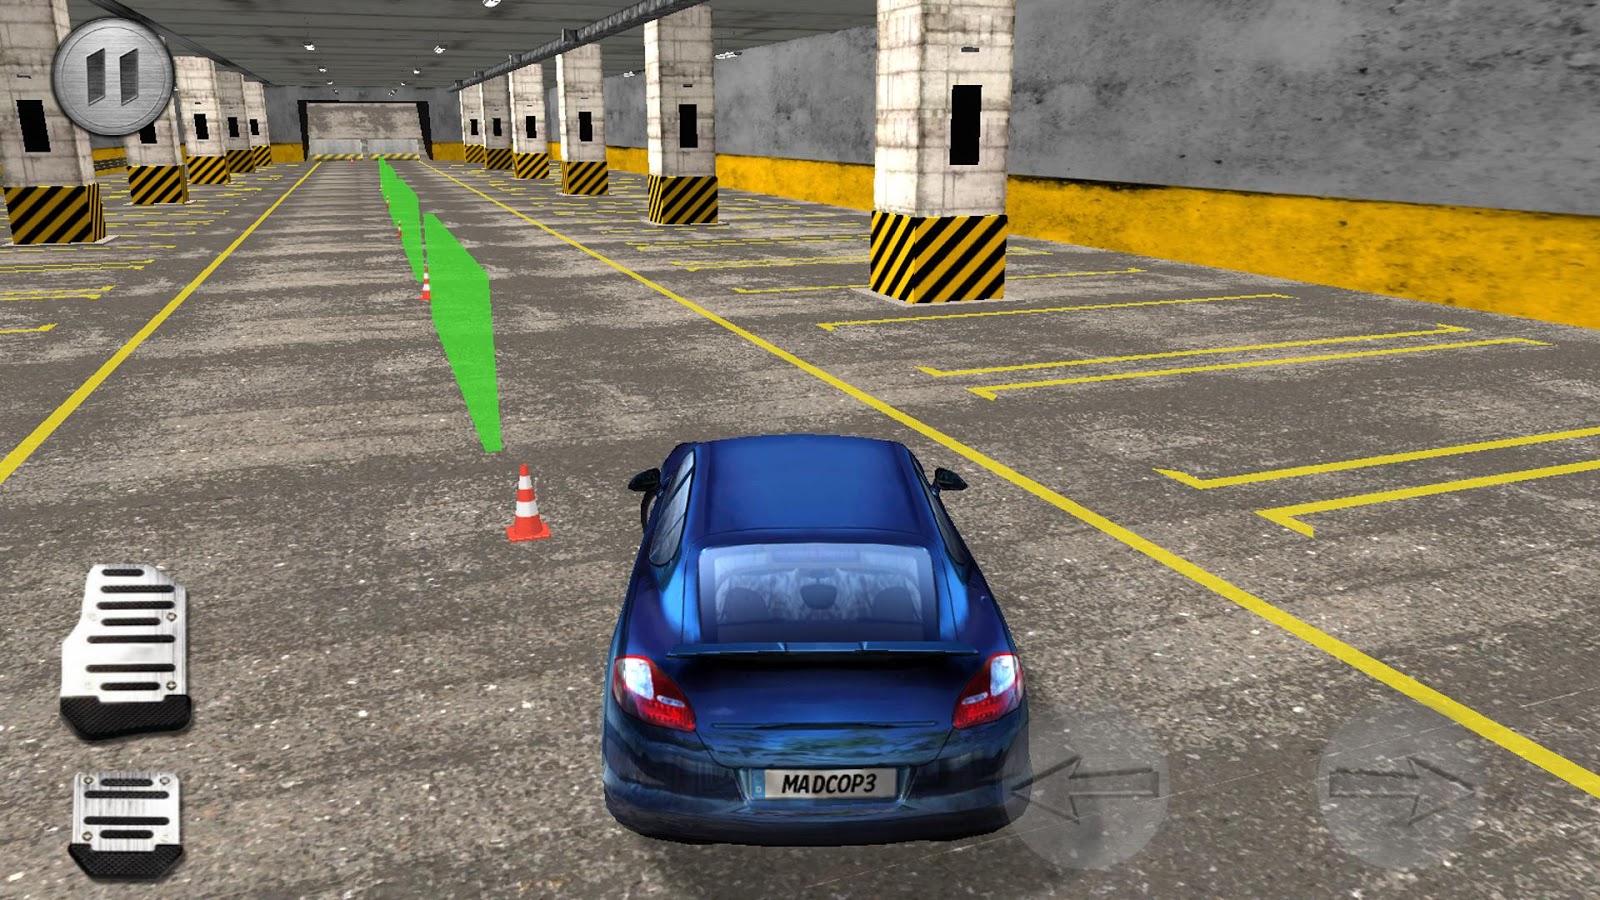 Parking Simulator 3d